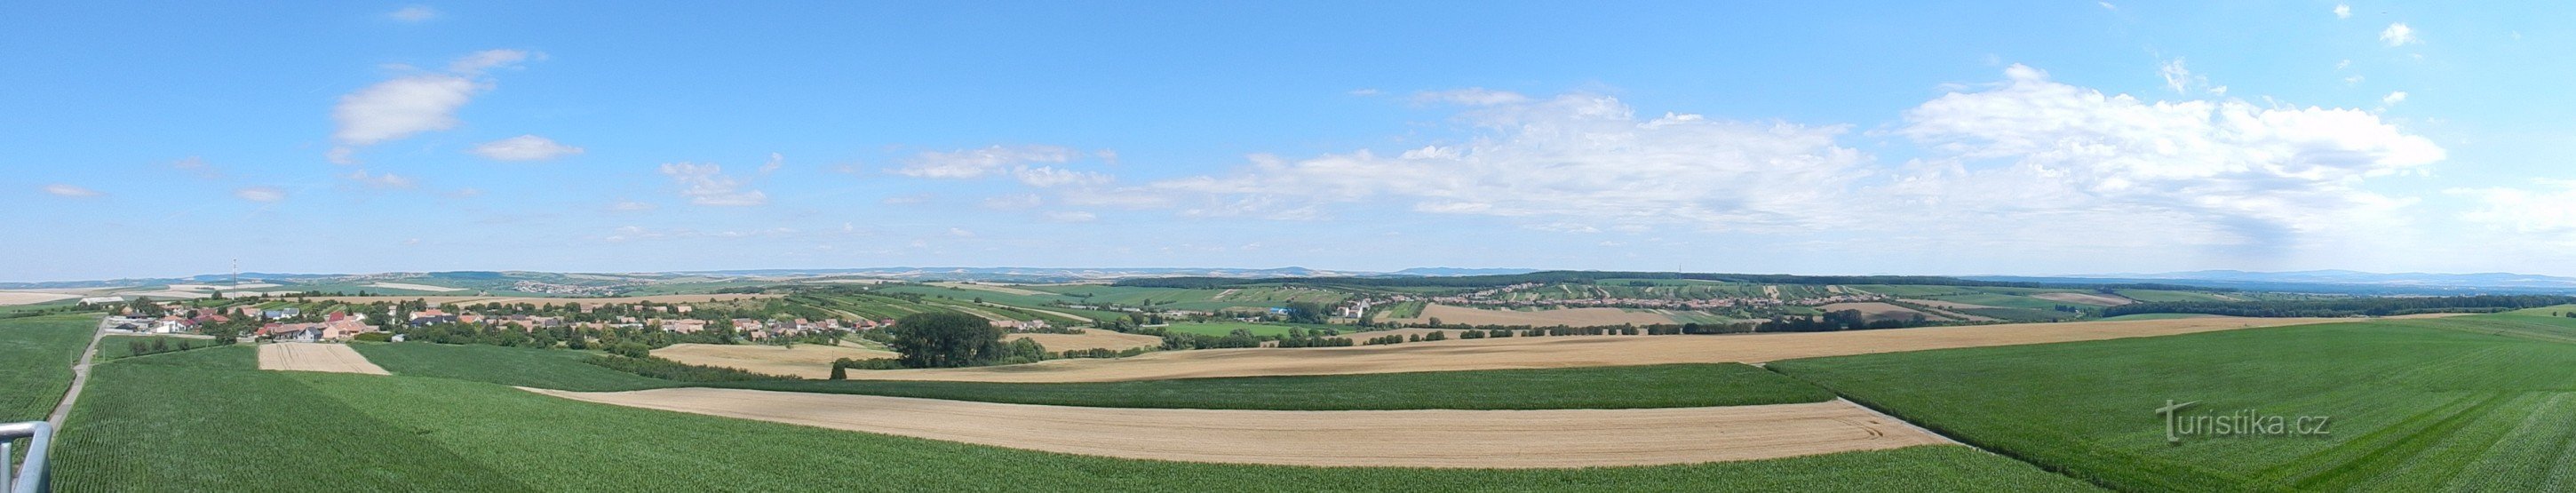 Views from Na Podluží lookout tower